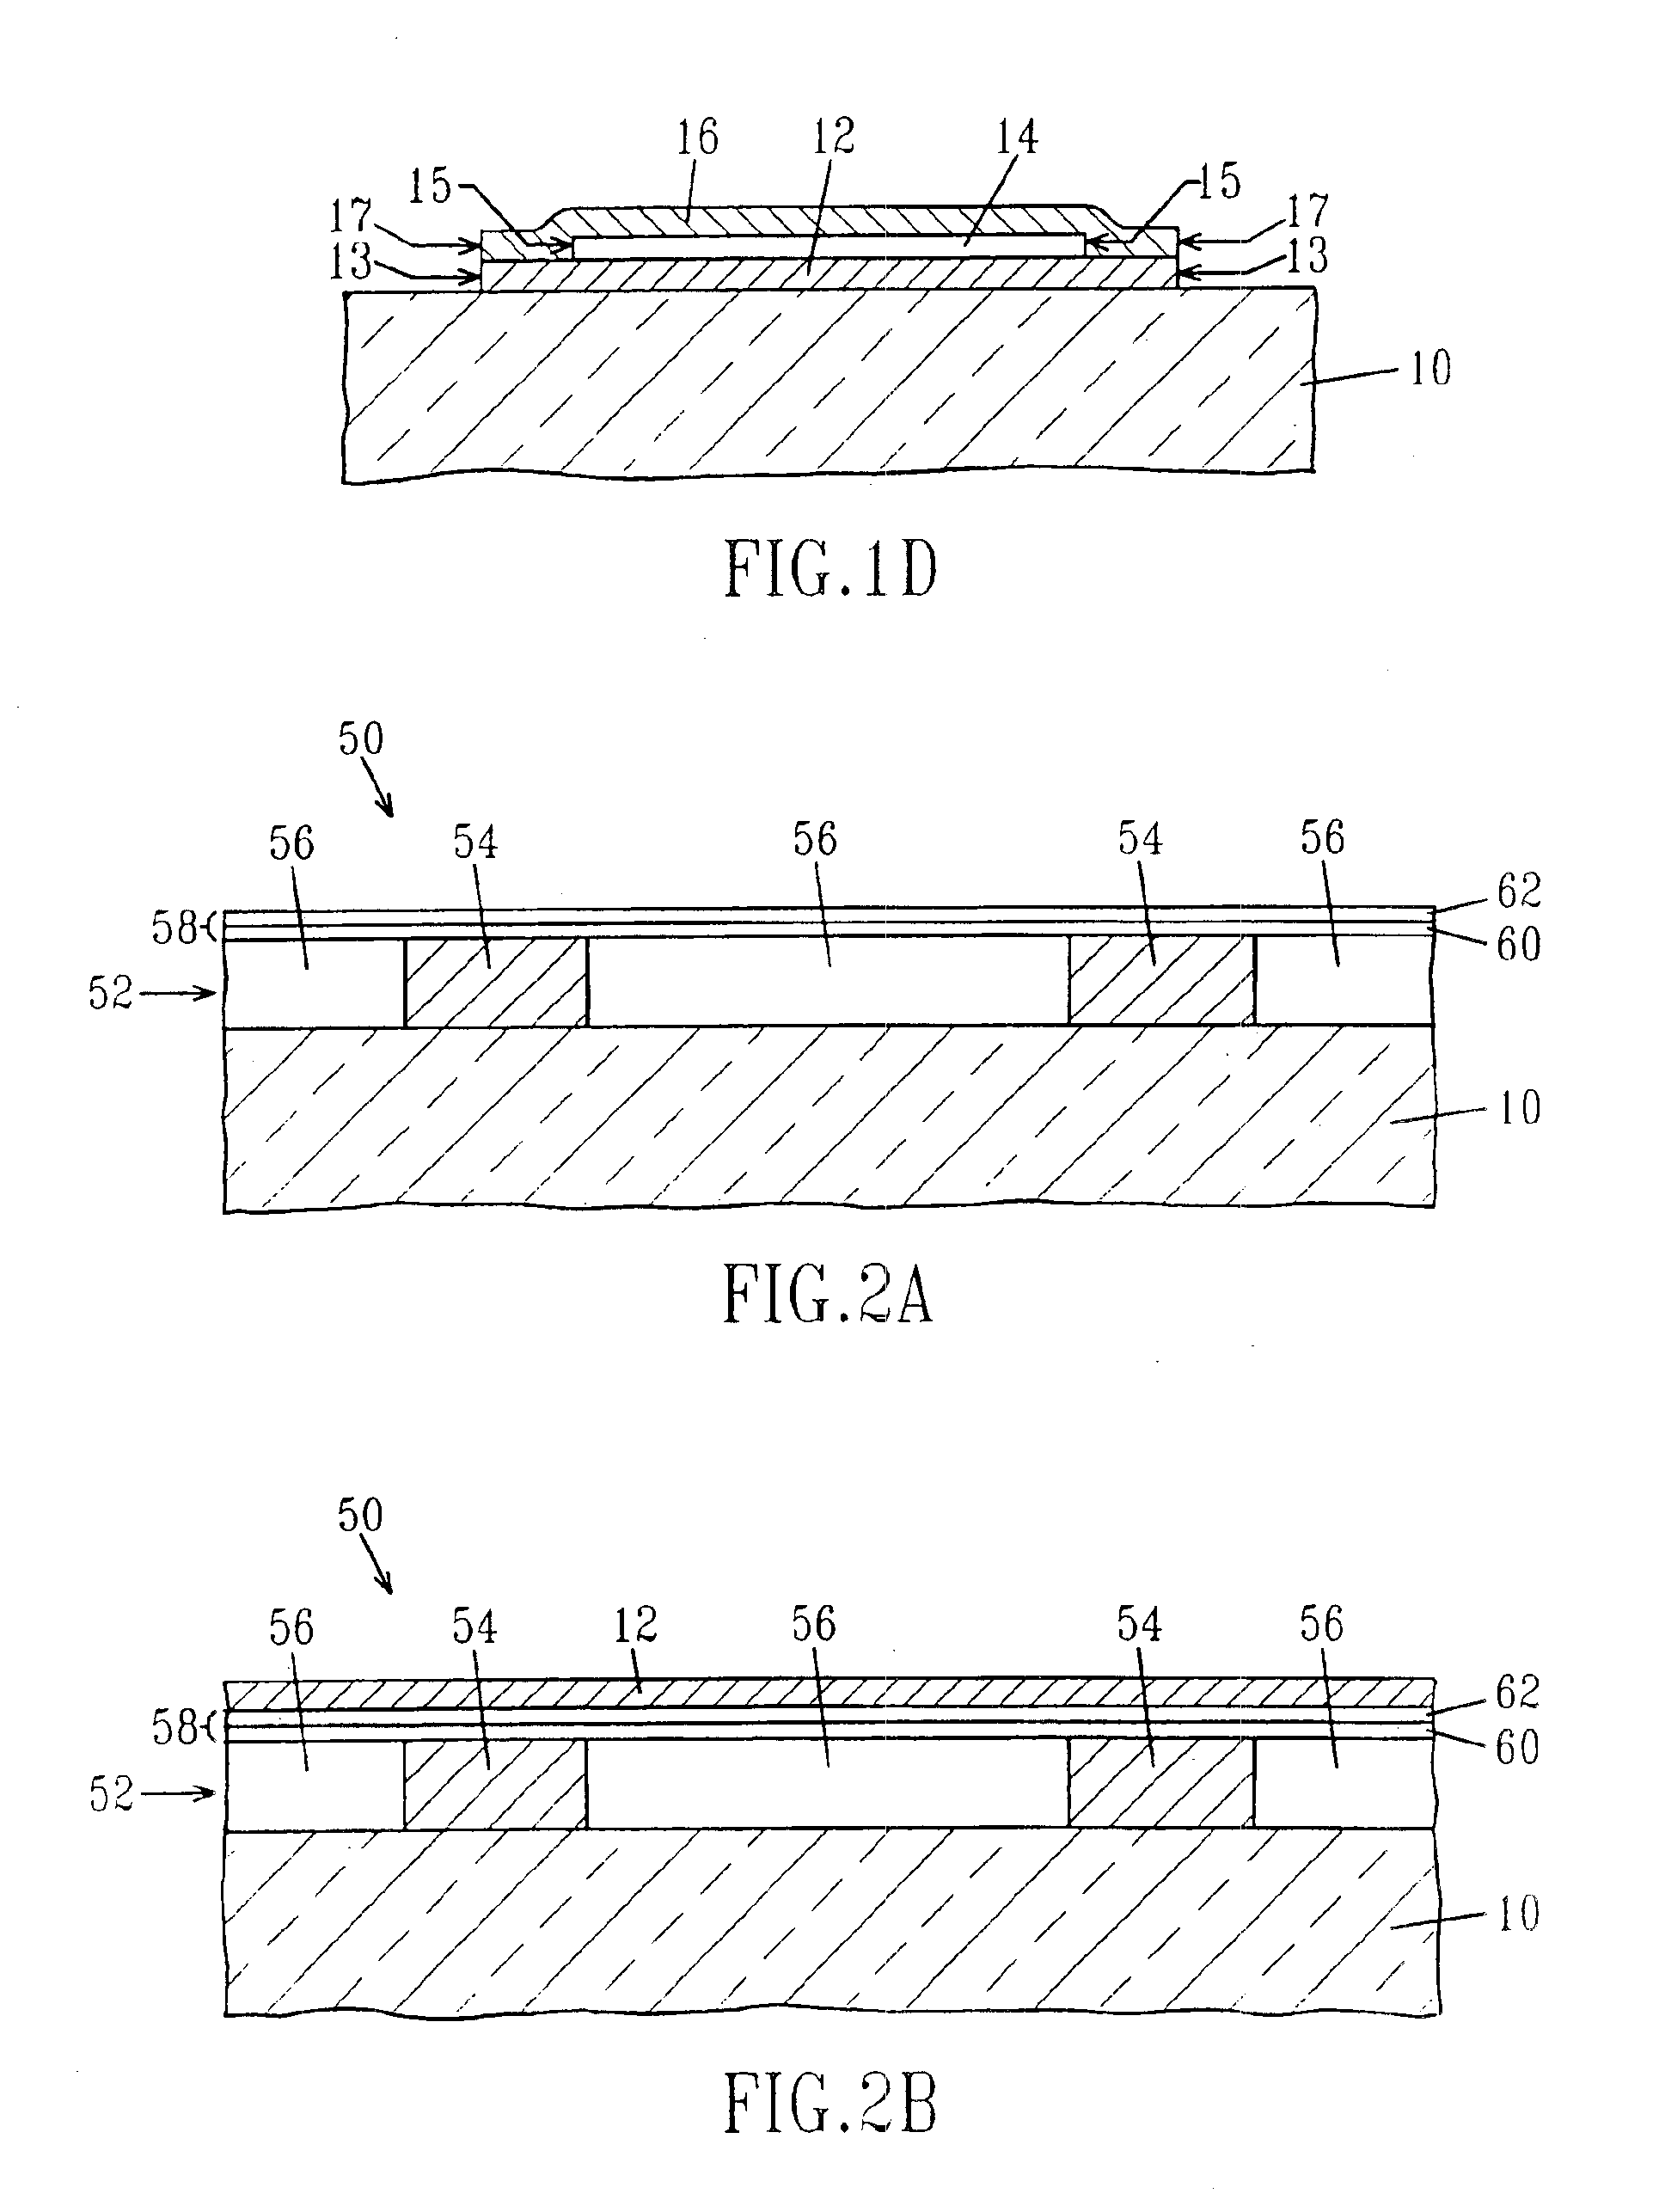 Method of fabrication of thin film resistor with zero TCR